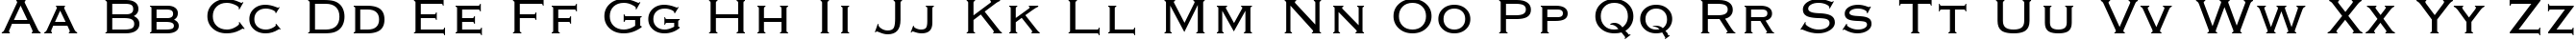 Пример написания английского алфавита шрифтом Copperplate Gothic BT